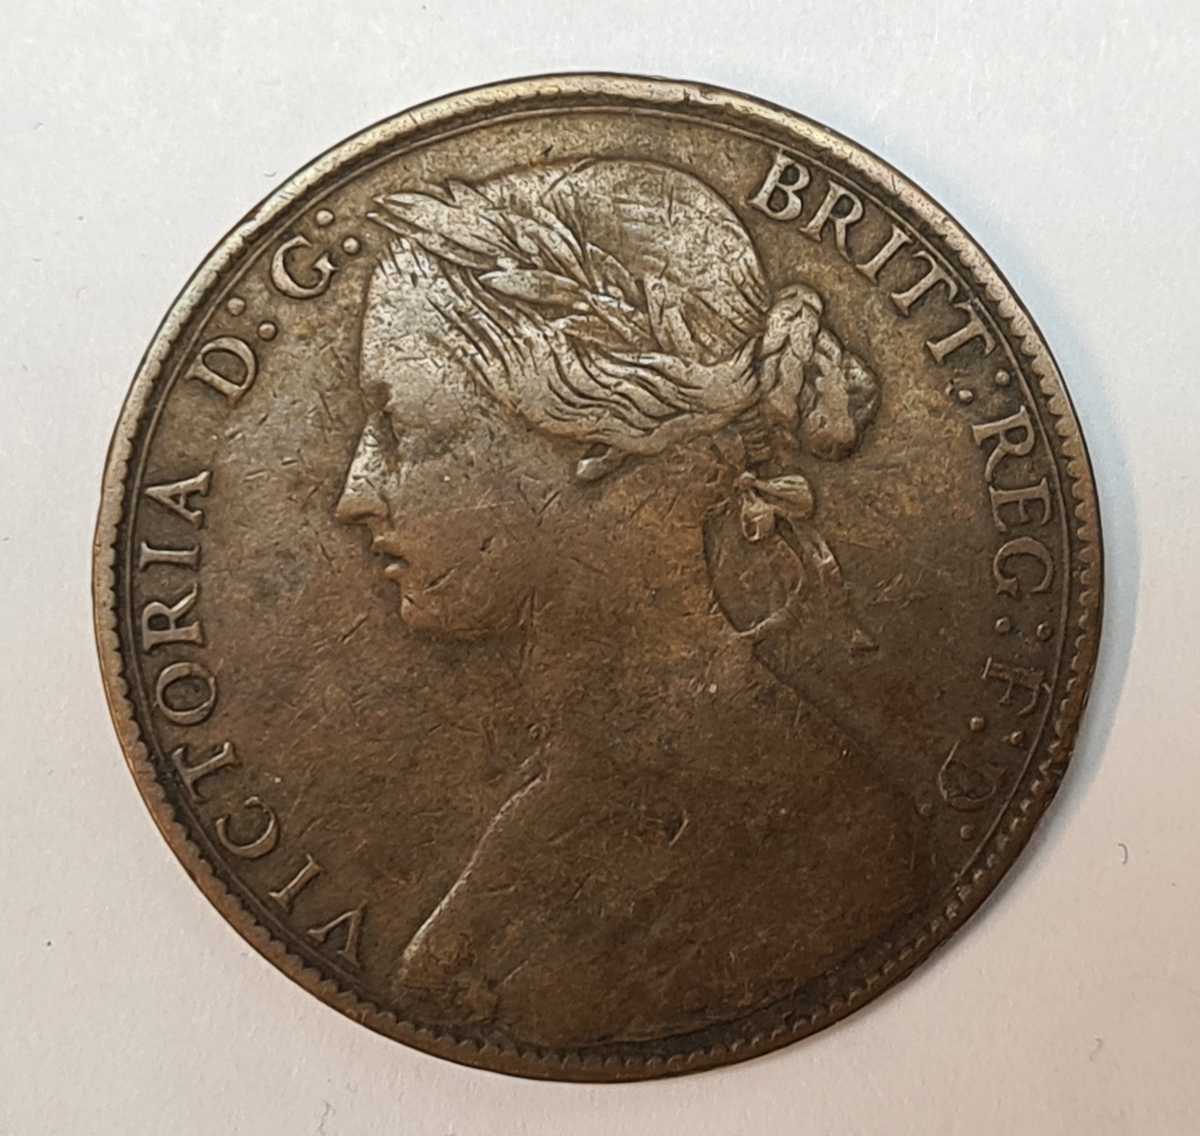 5 mynt från Storbritanien.
1 Penny, 1860
1 Penny, 1861
1 Penny, 1862
1 Penny, 1876
1 Penny, 1889